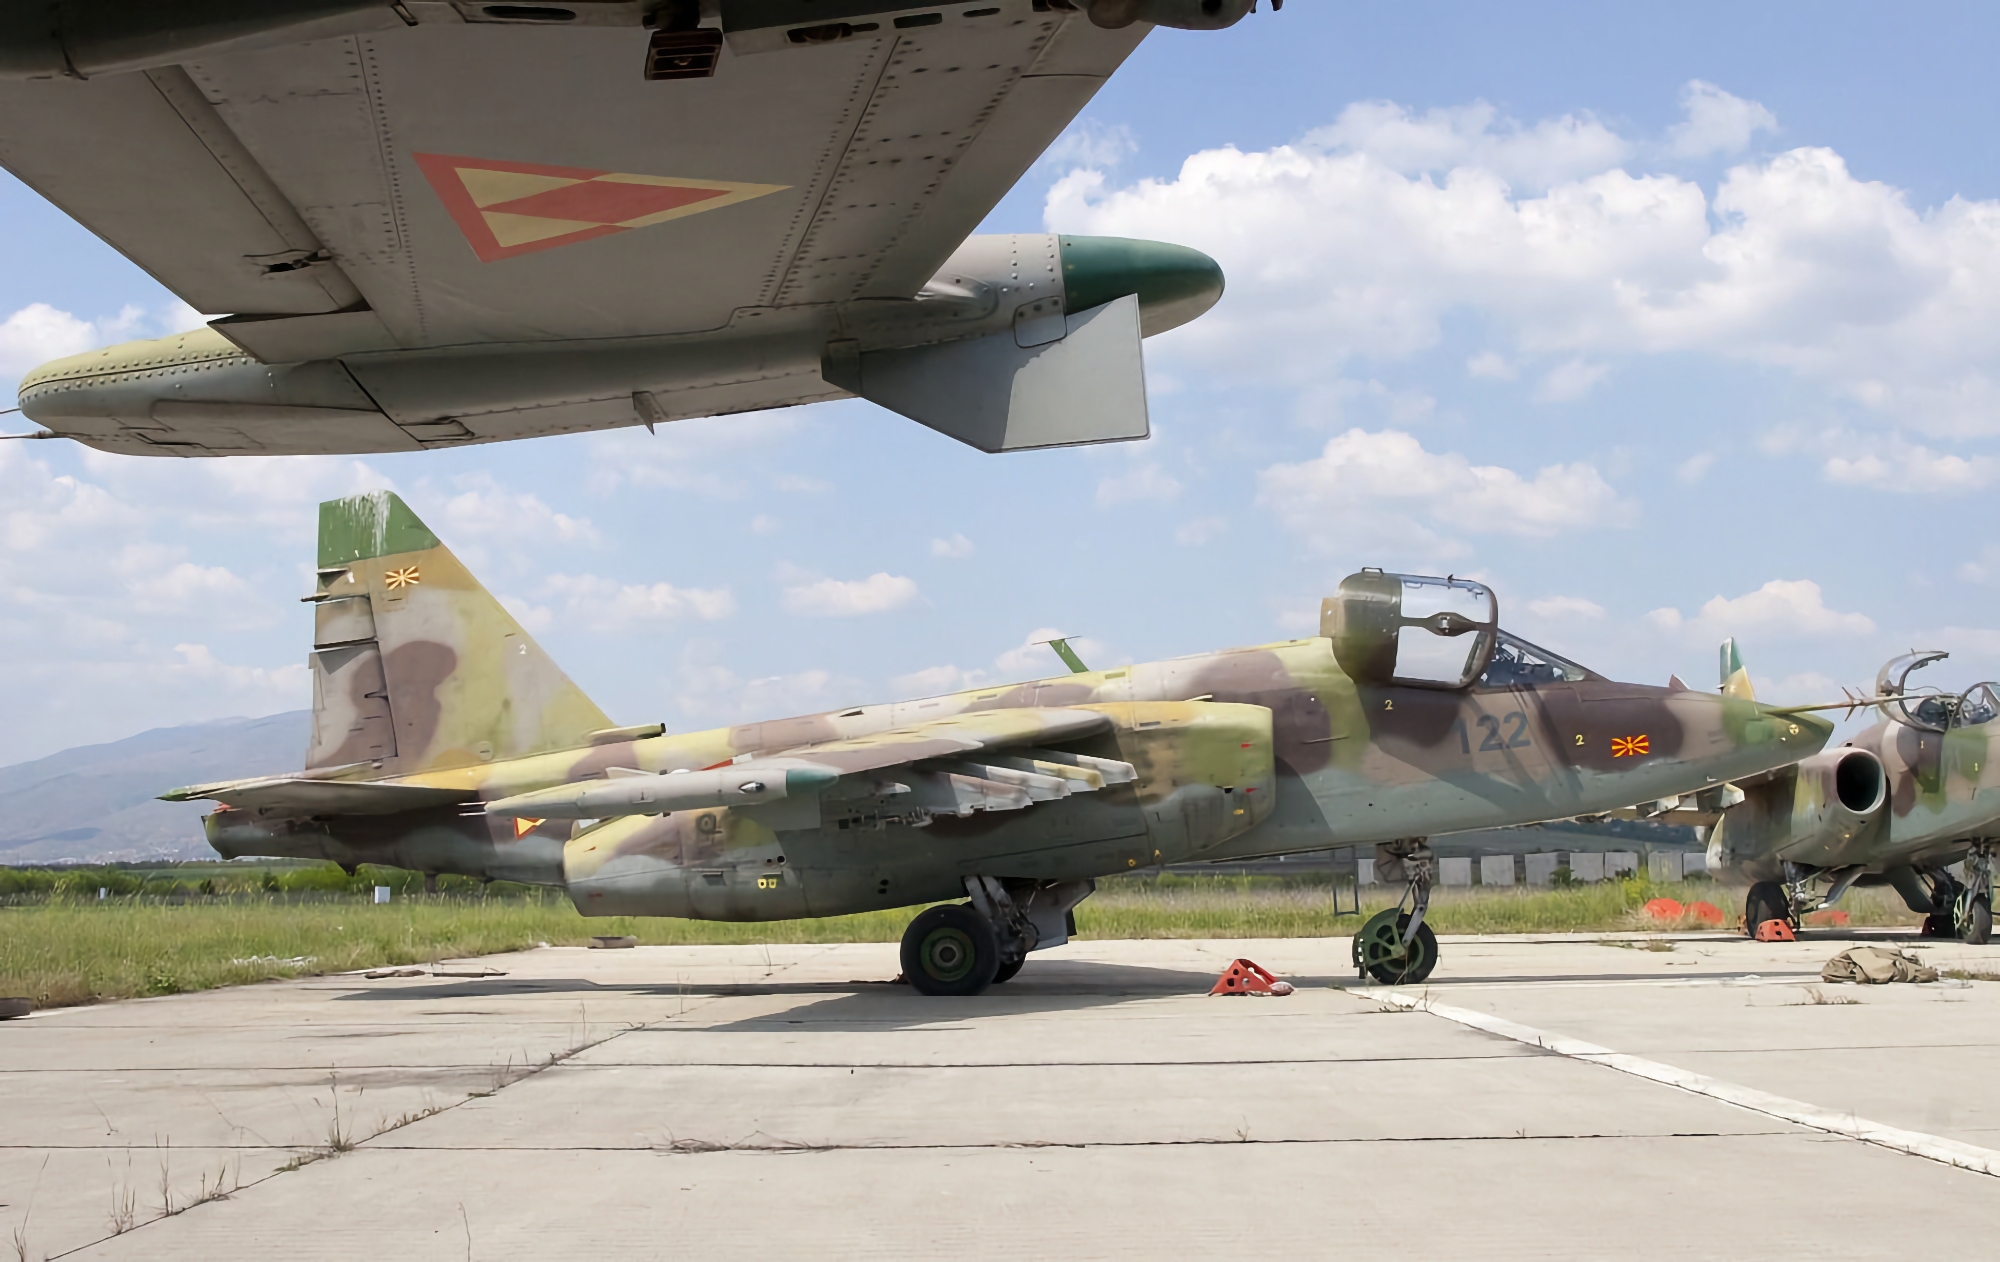 Northern Macedonia confirms transfer of Su-25 aircraft to Ukraine